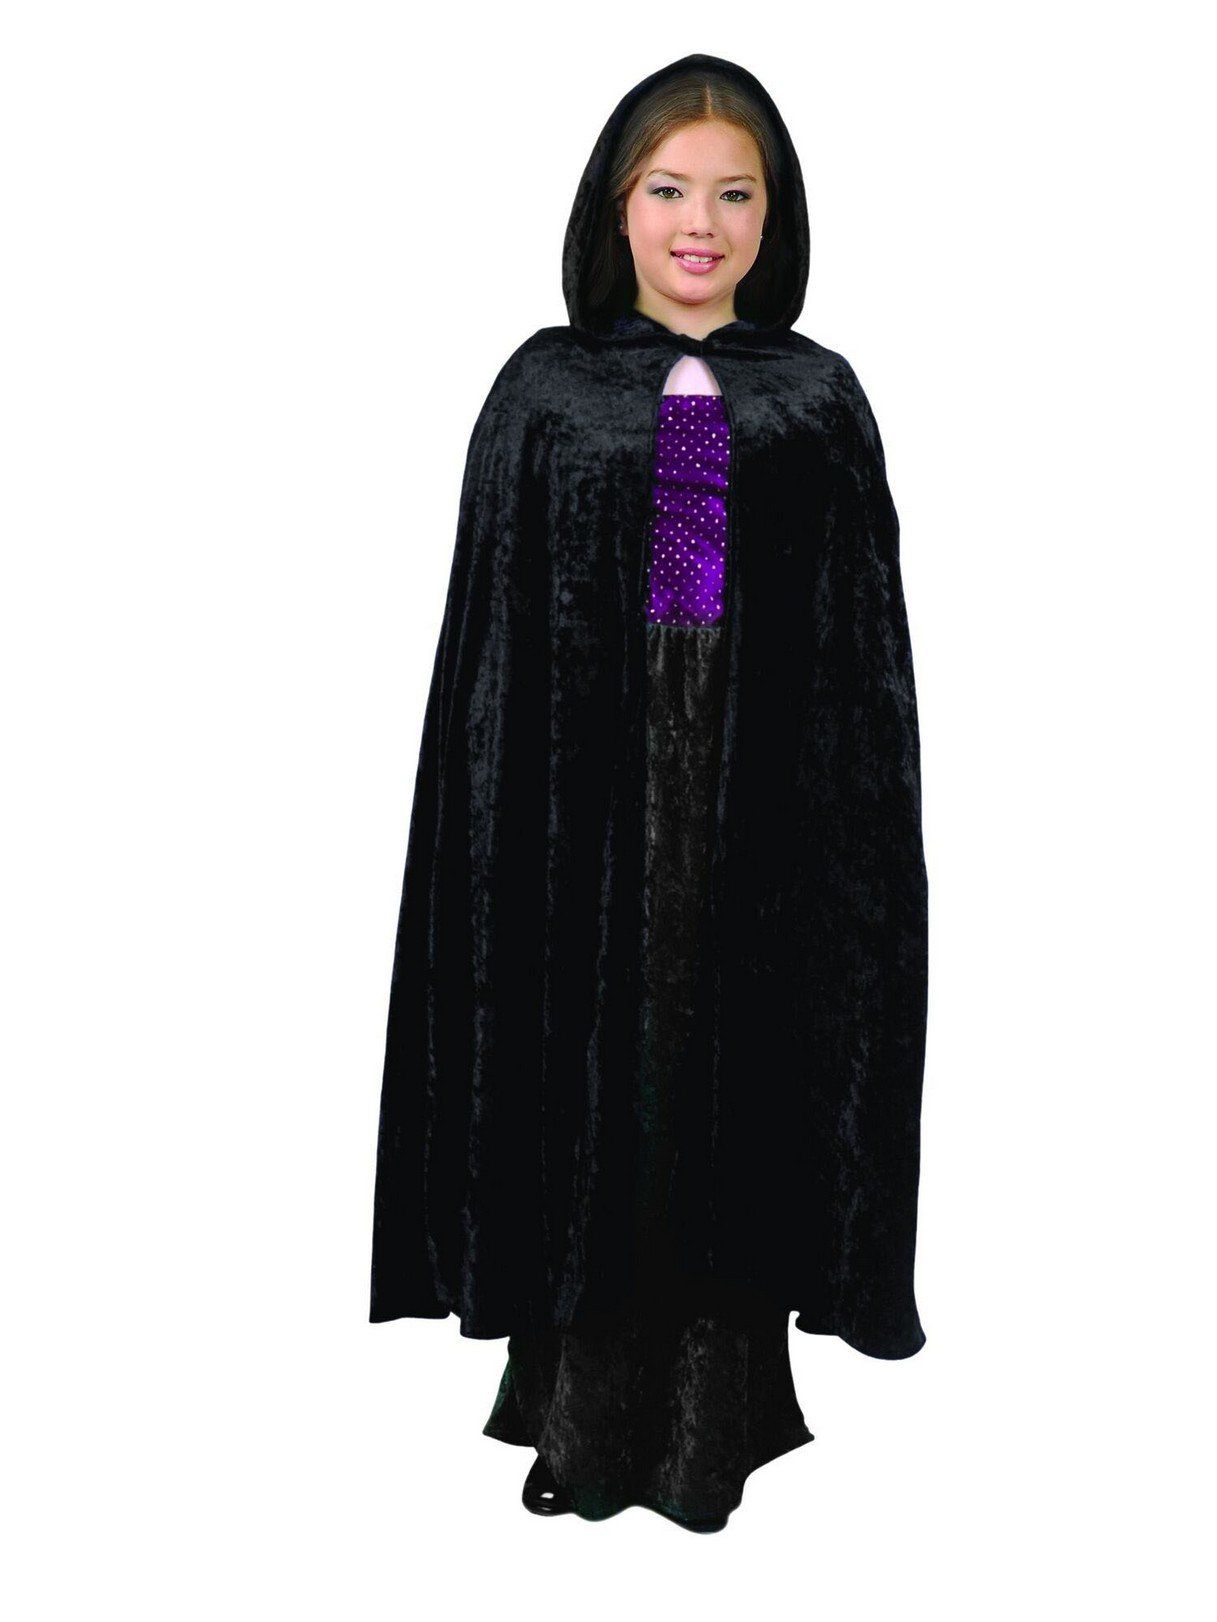 Charades Hooded Cloak - Black Child Costume